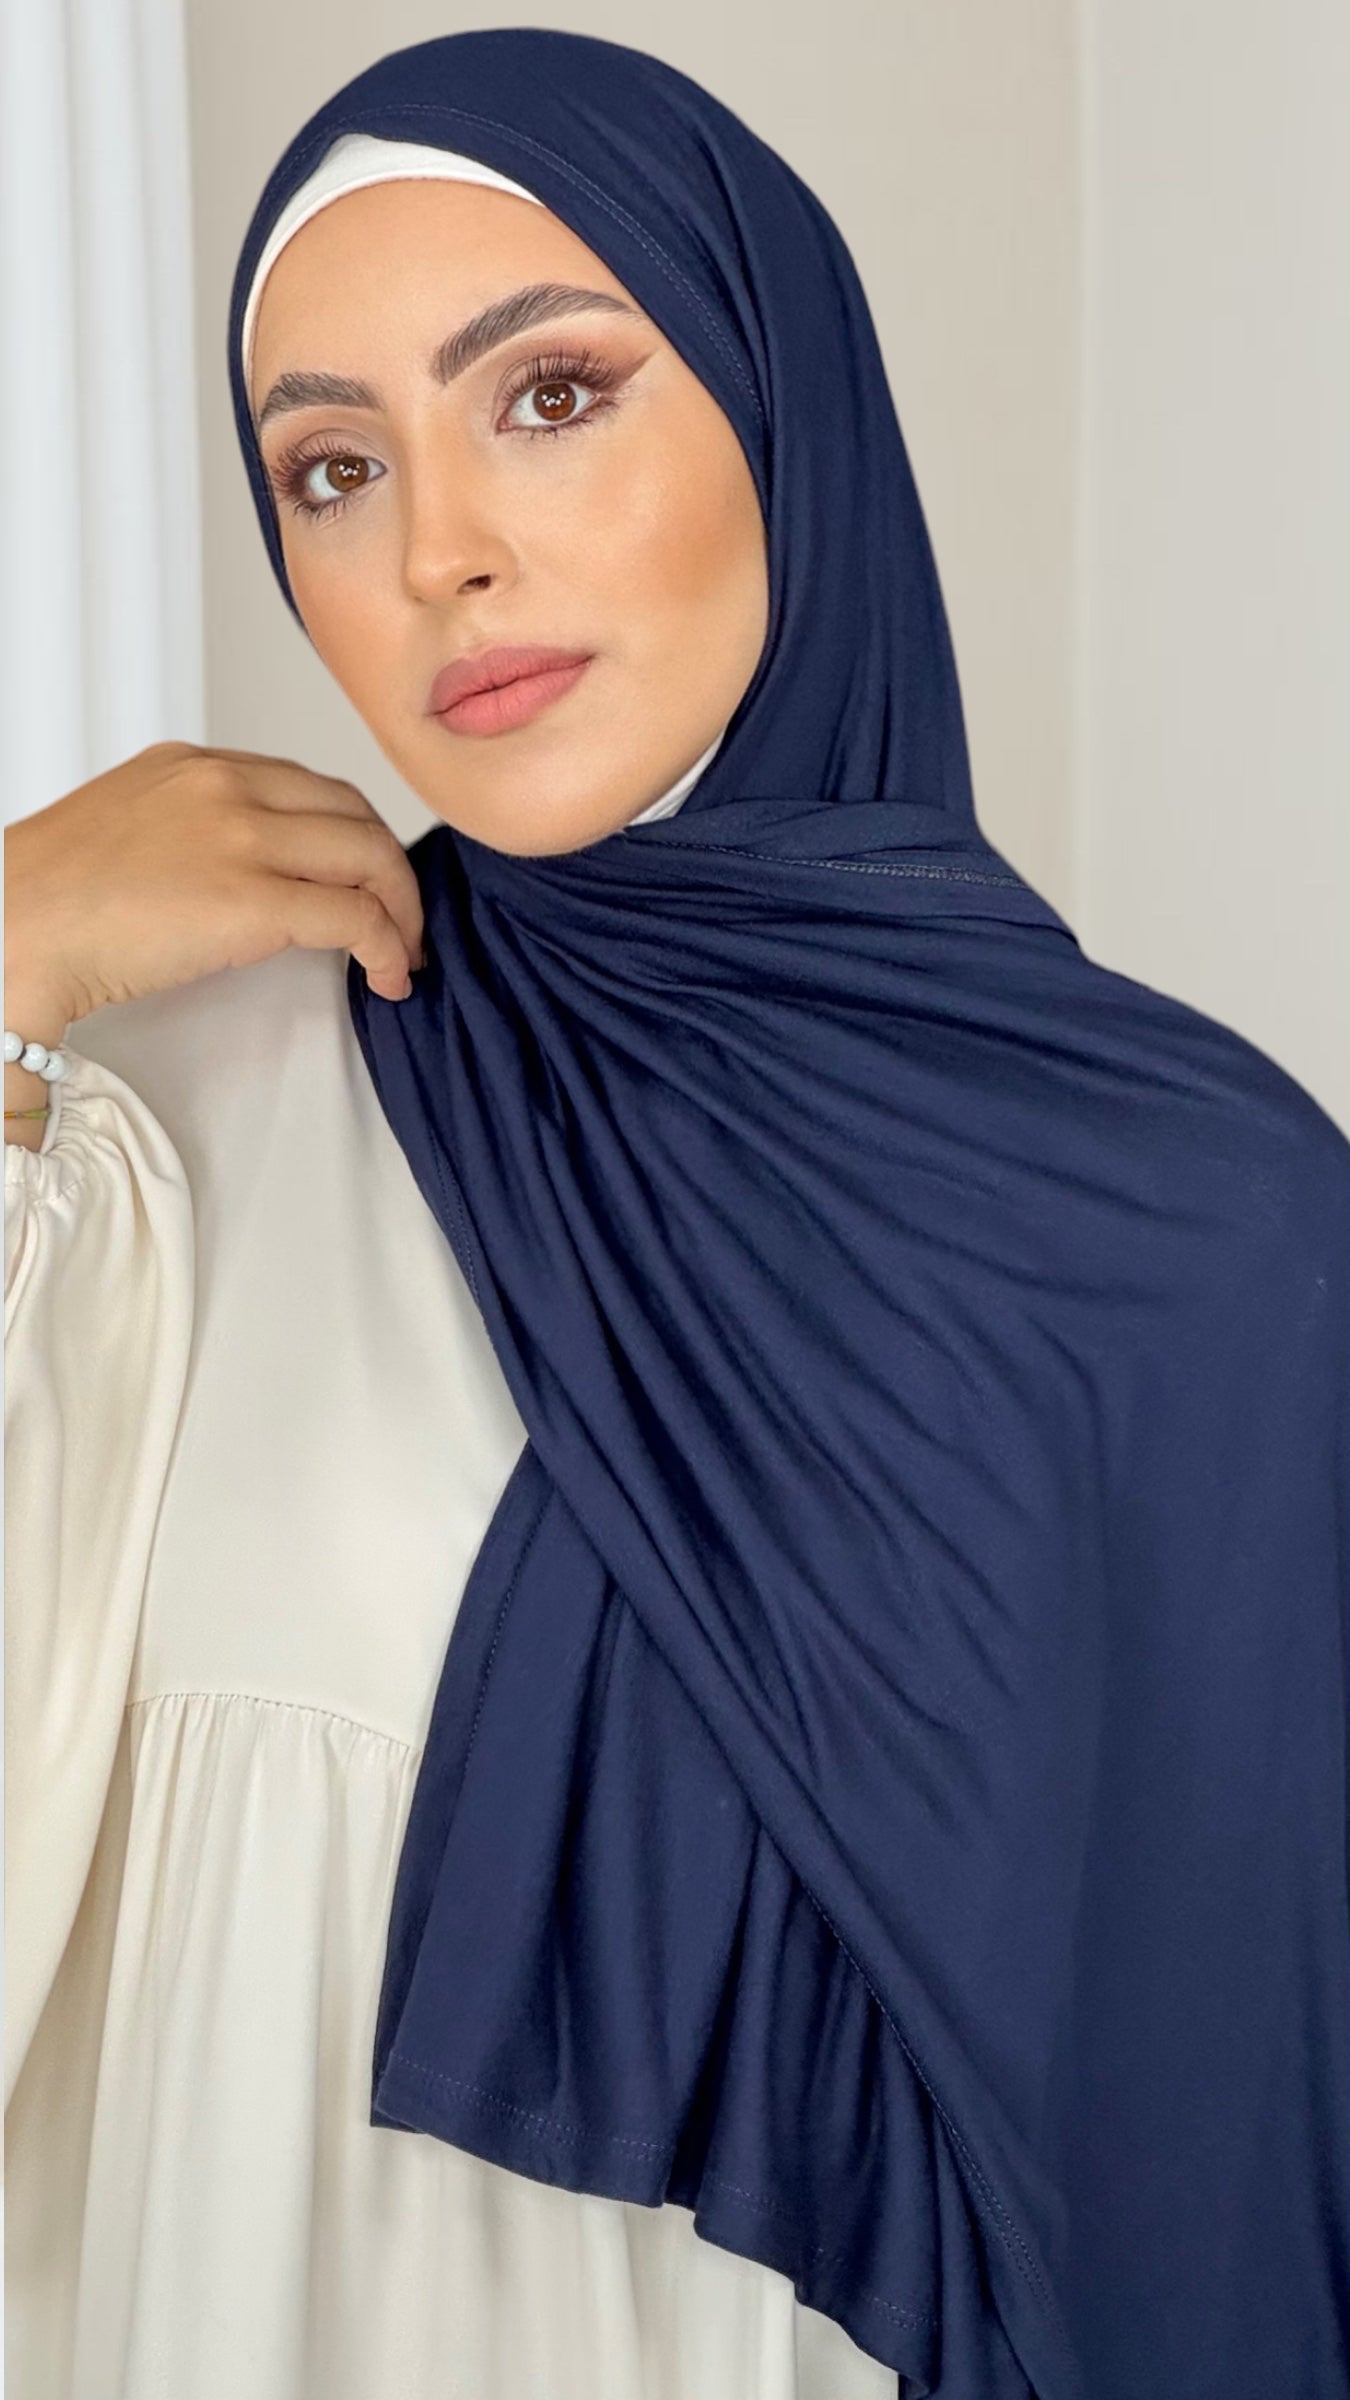 Hijab Jersey blu notte - Hijab Paradise Hijab, chador, velo, turbante, foulard, copricapo, musulmano, islamico, sciarpa, 